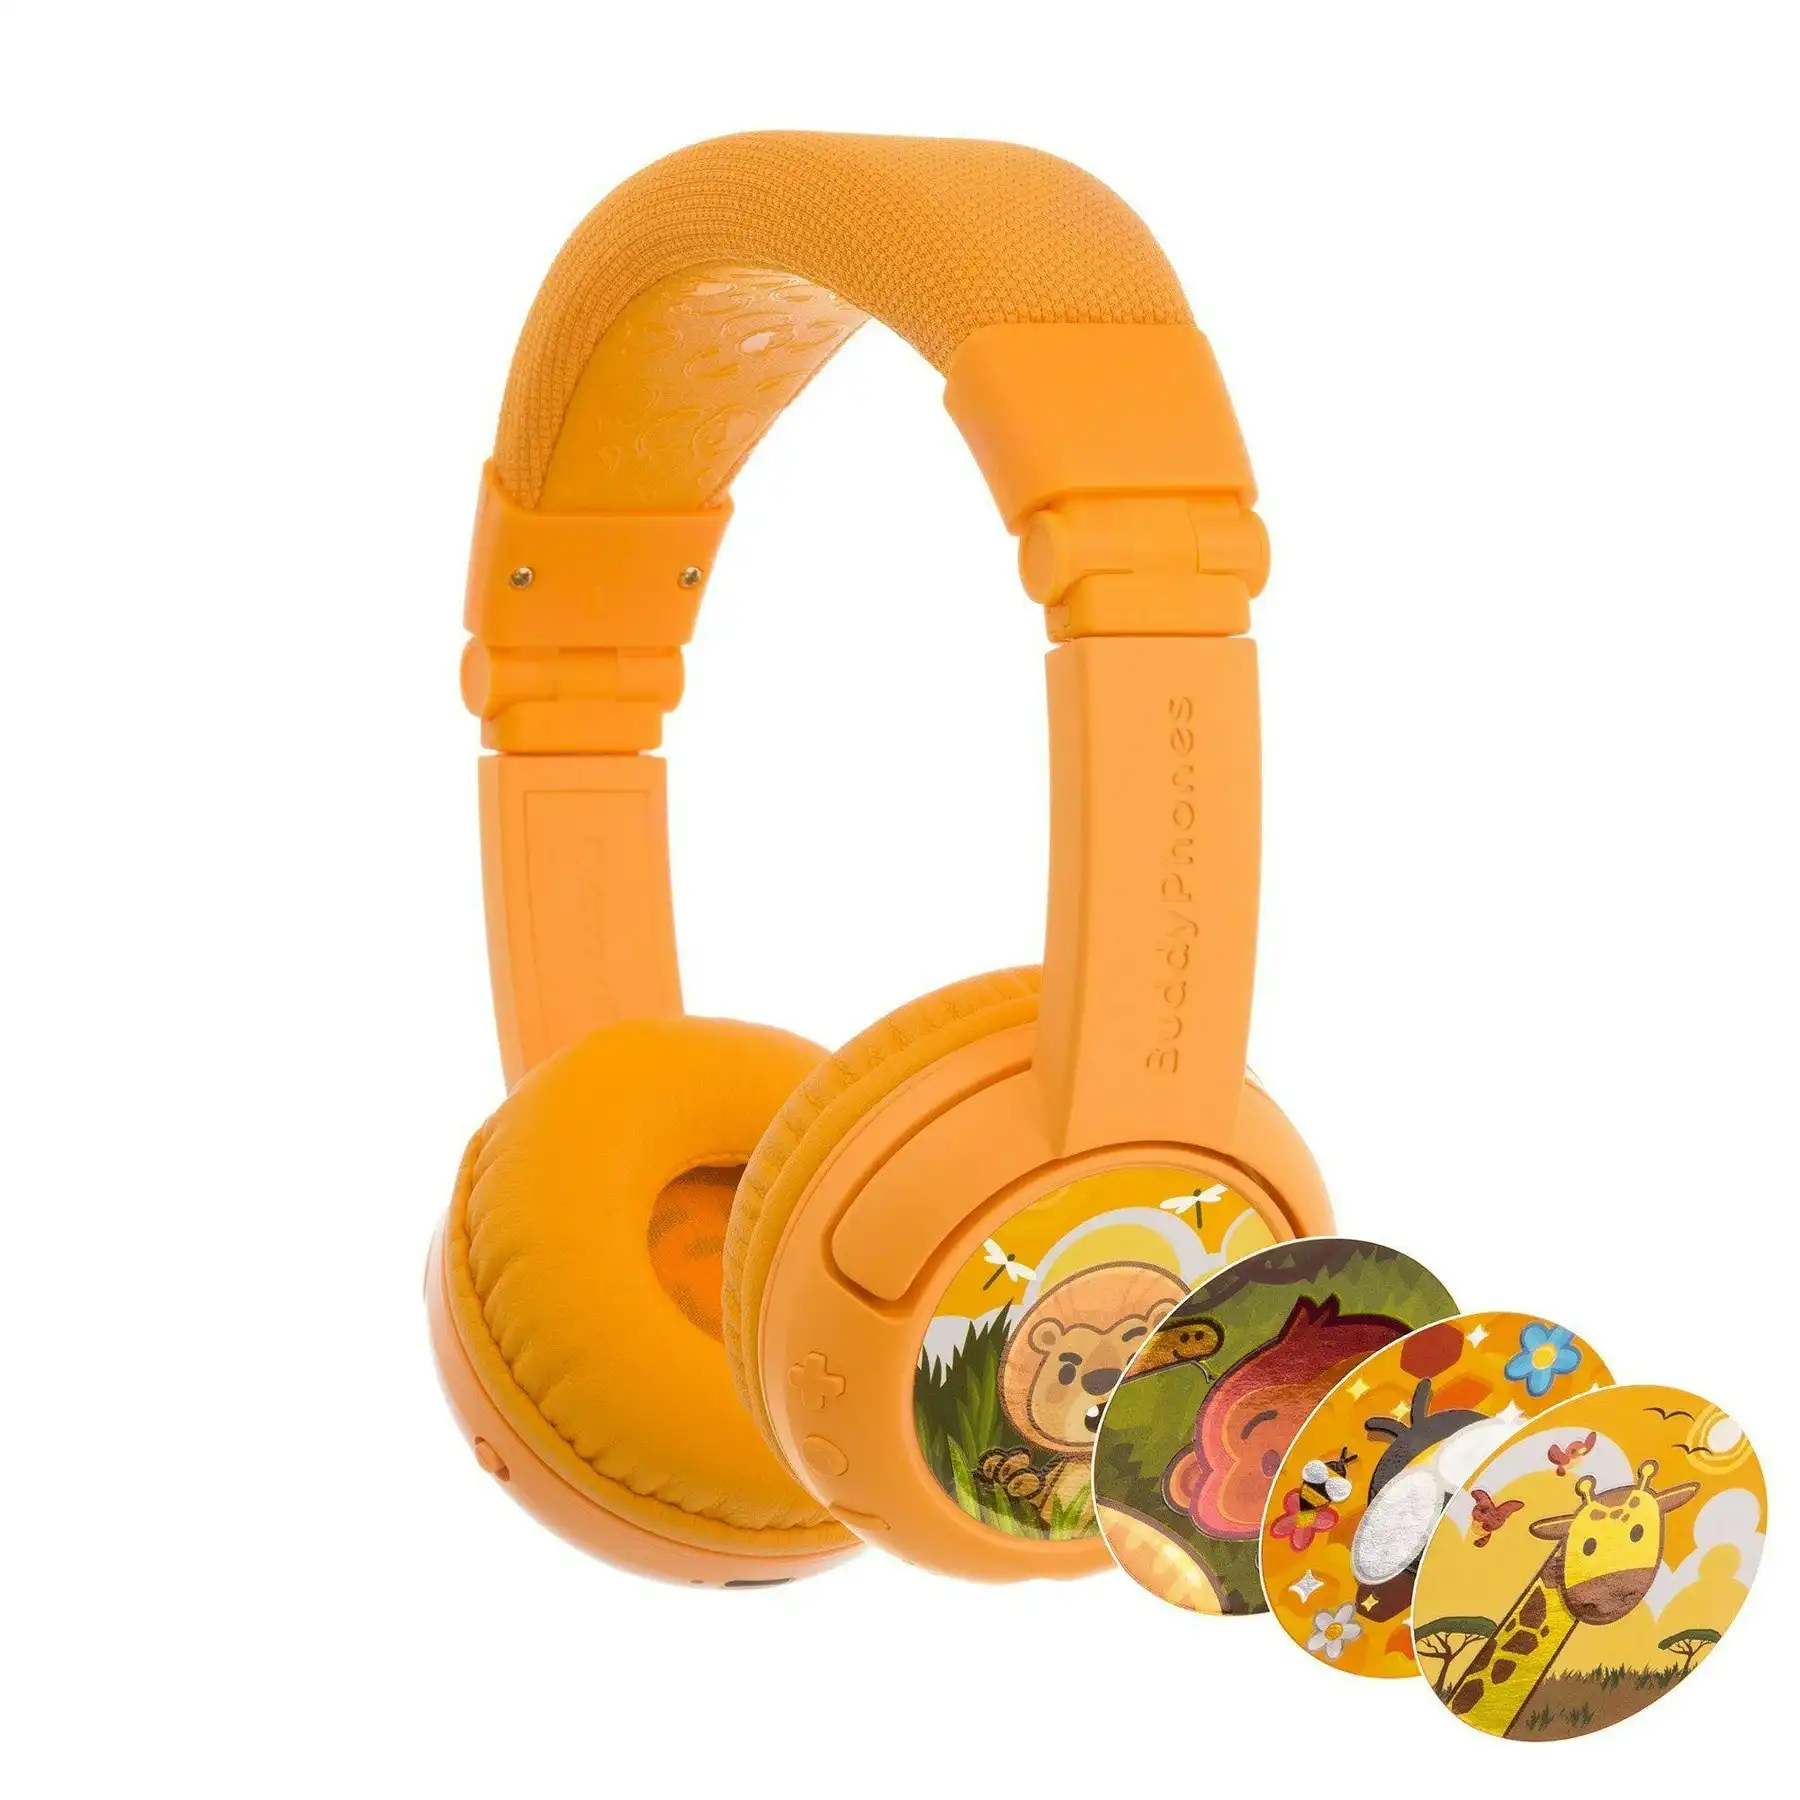 Buddyphones Play Plus Wireless Headphones - Sun Yellow